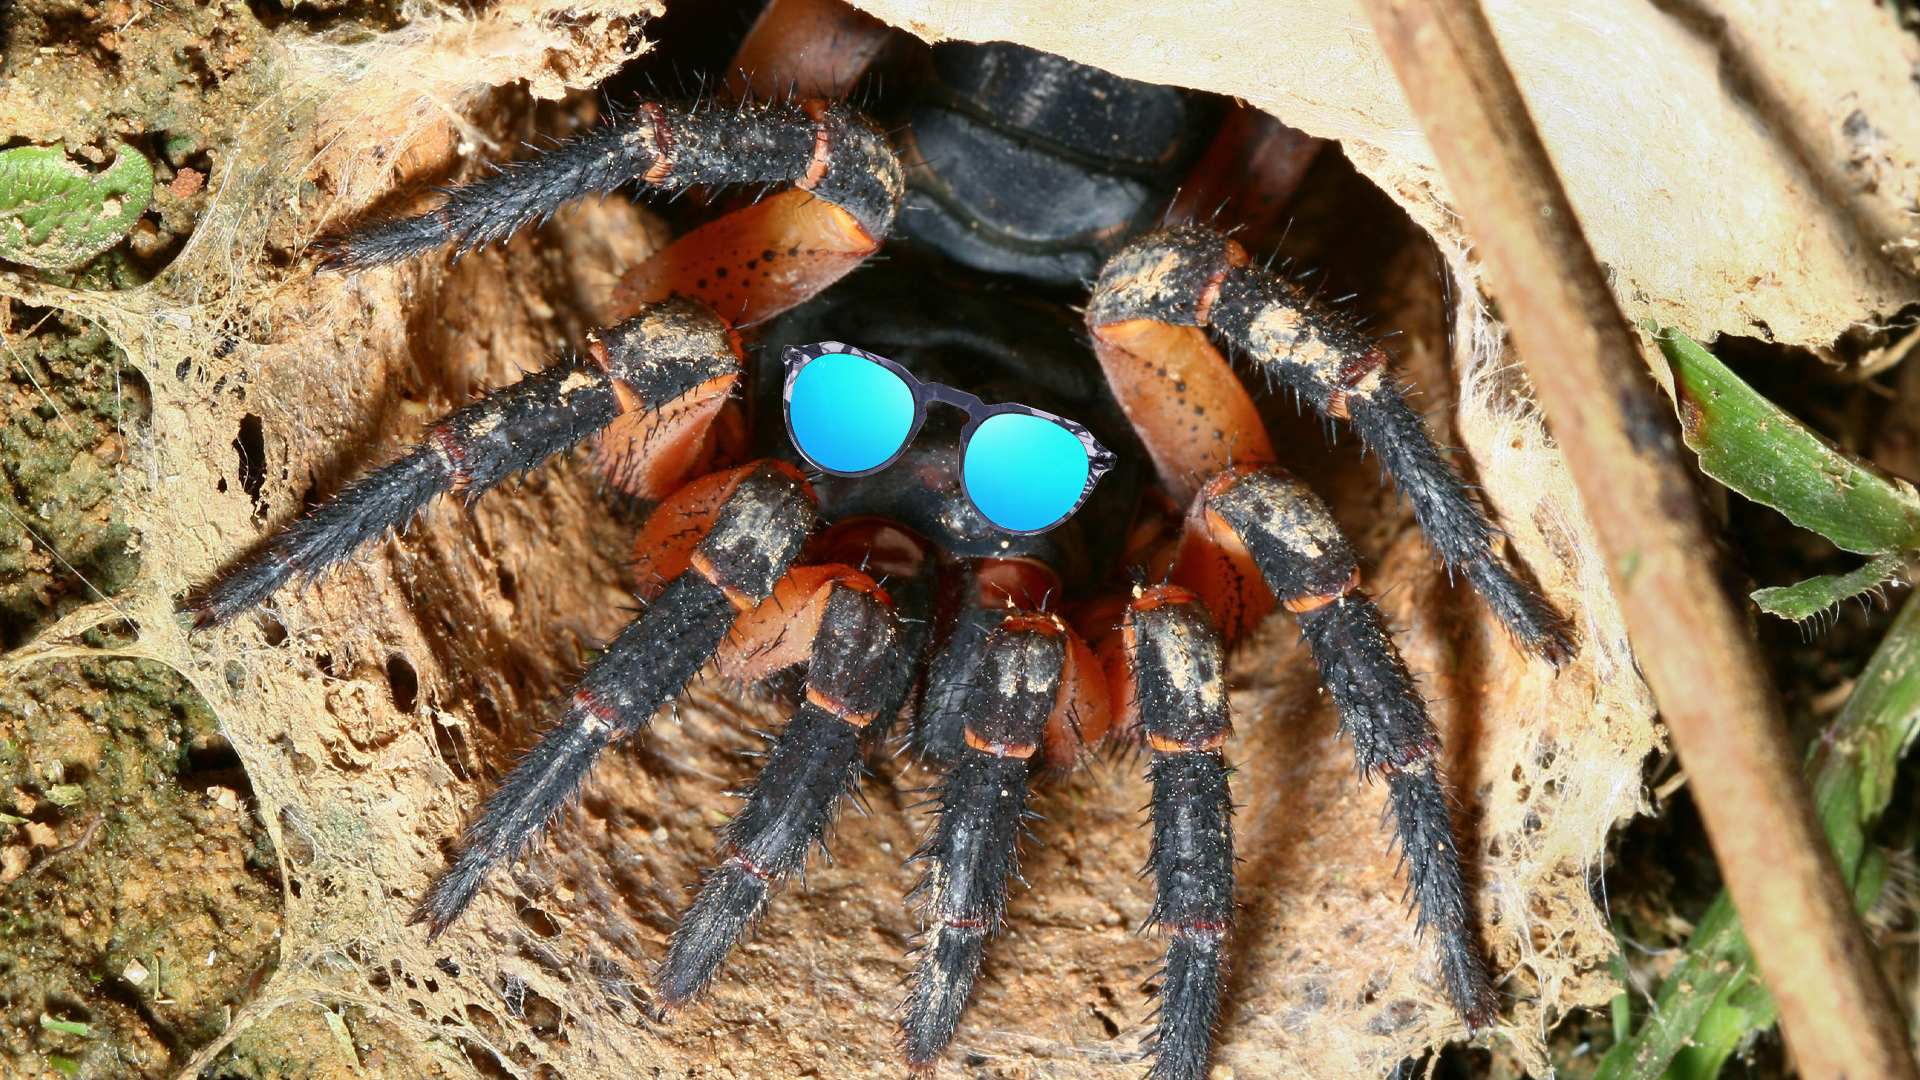 A trapdoor spider wearing sunglasses